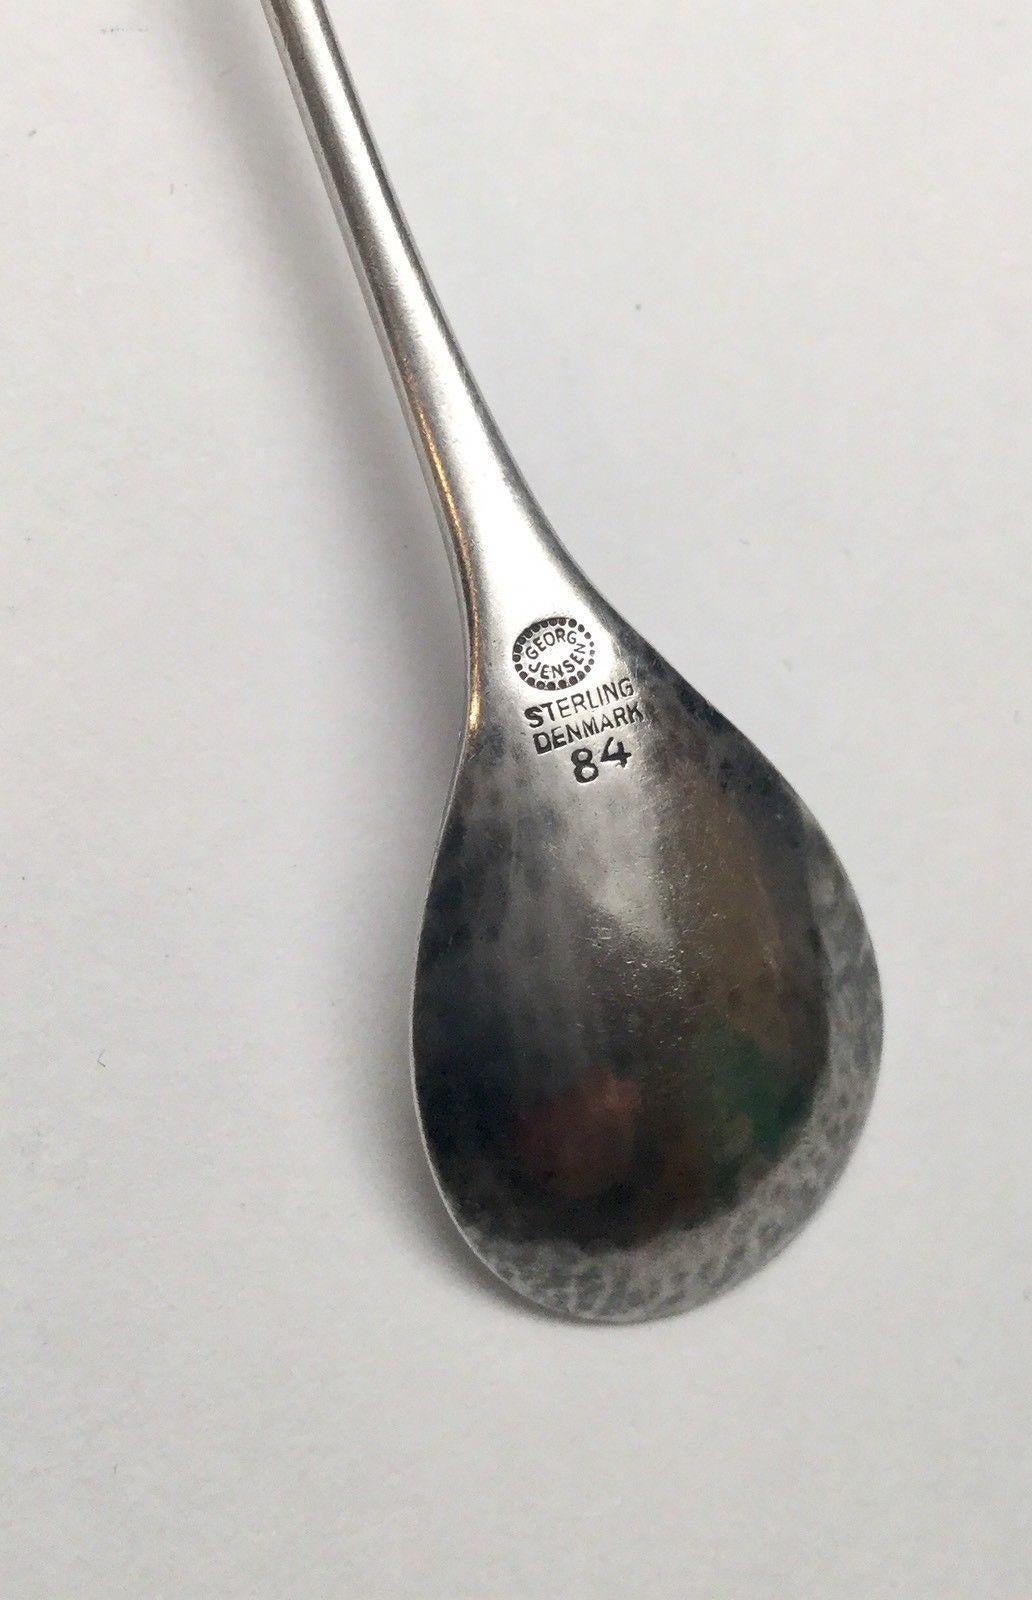 Danish Georg Jensen Denmark Blossom 84 Hammered Sterling Silver Coffee Spoon